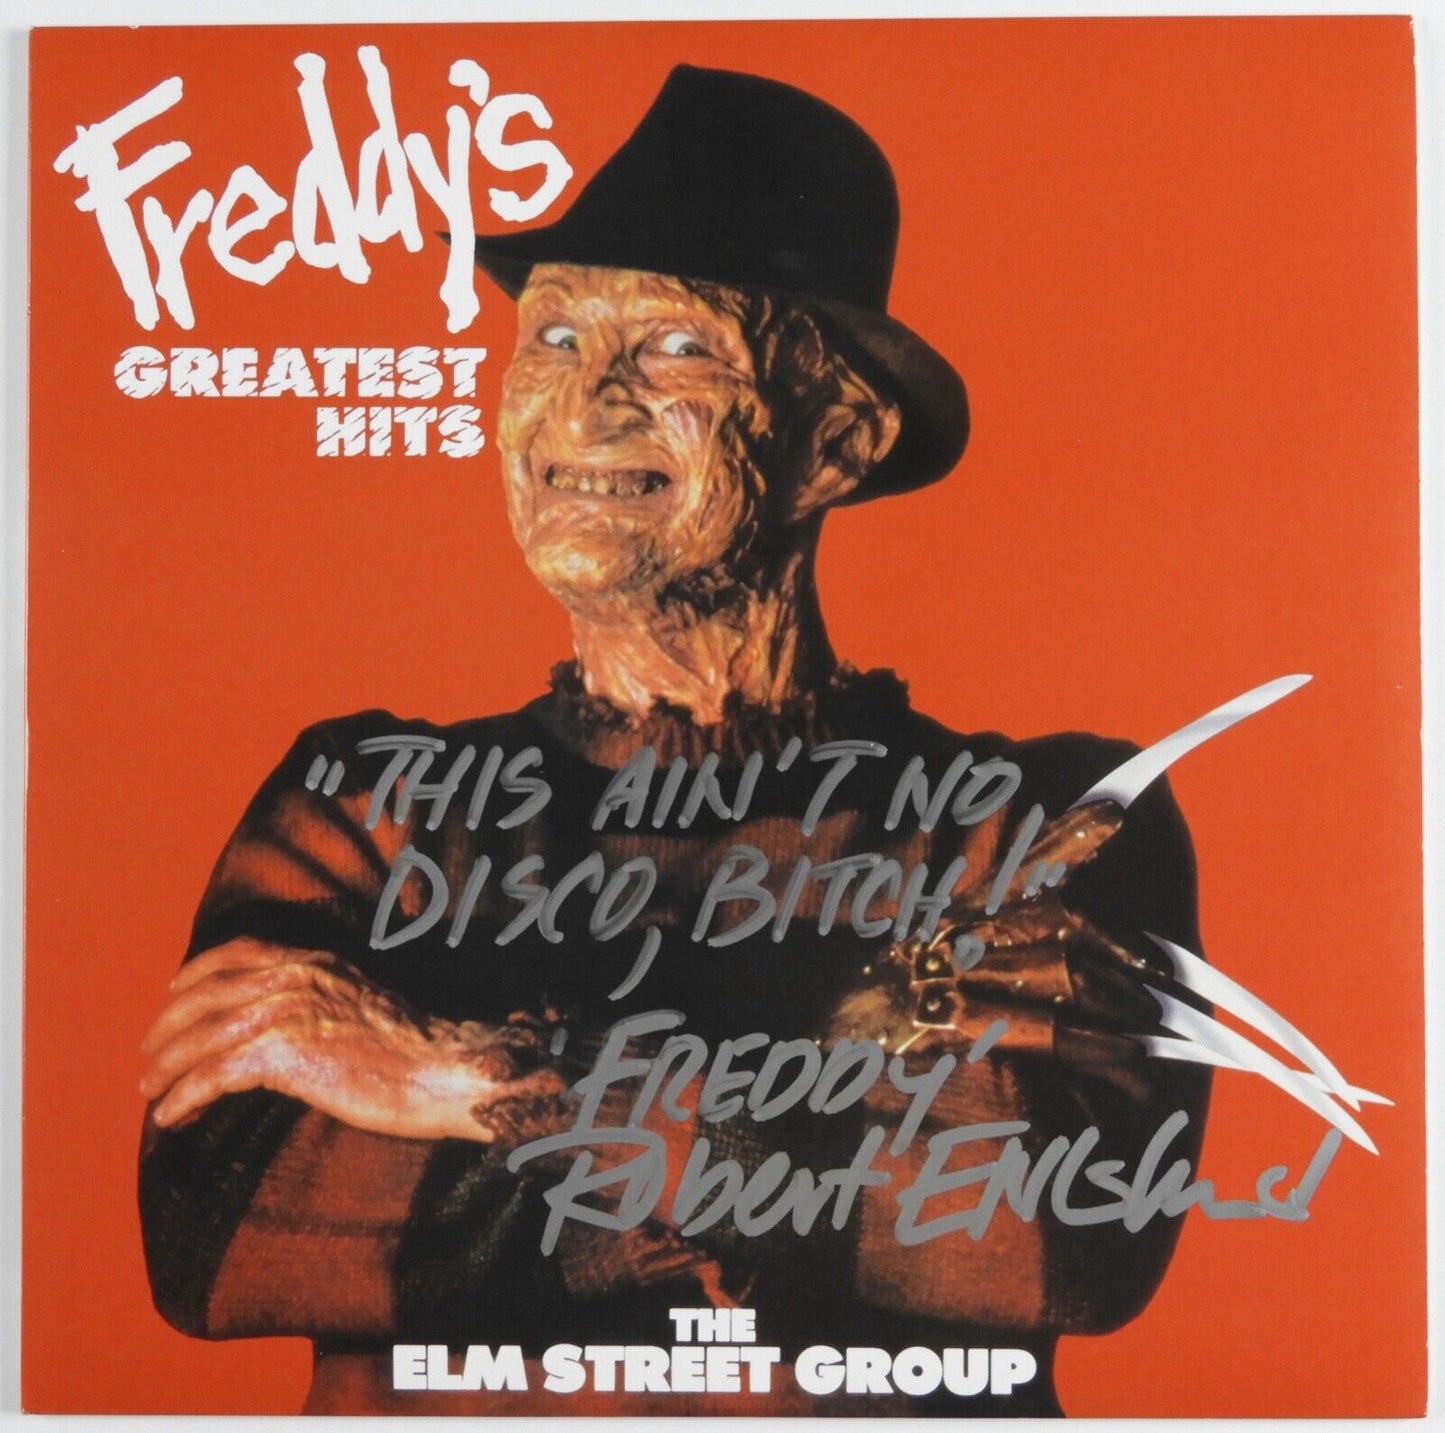 Freddy Krueger Robert Englund Signed Autograph Freddy's Greatest Hits Album Viny